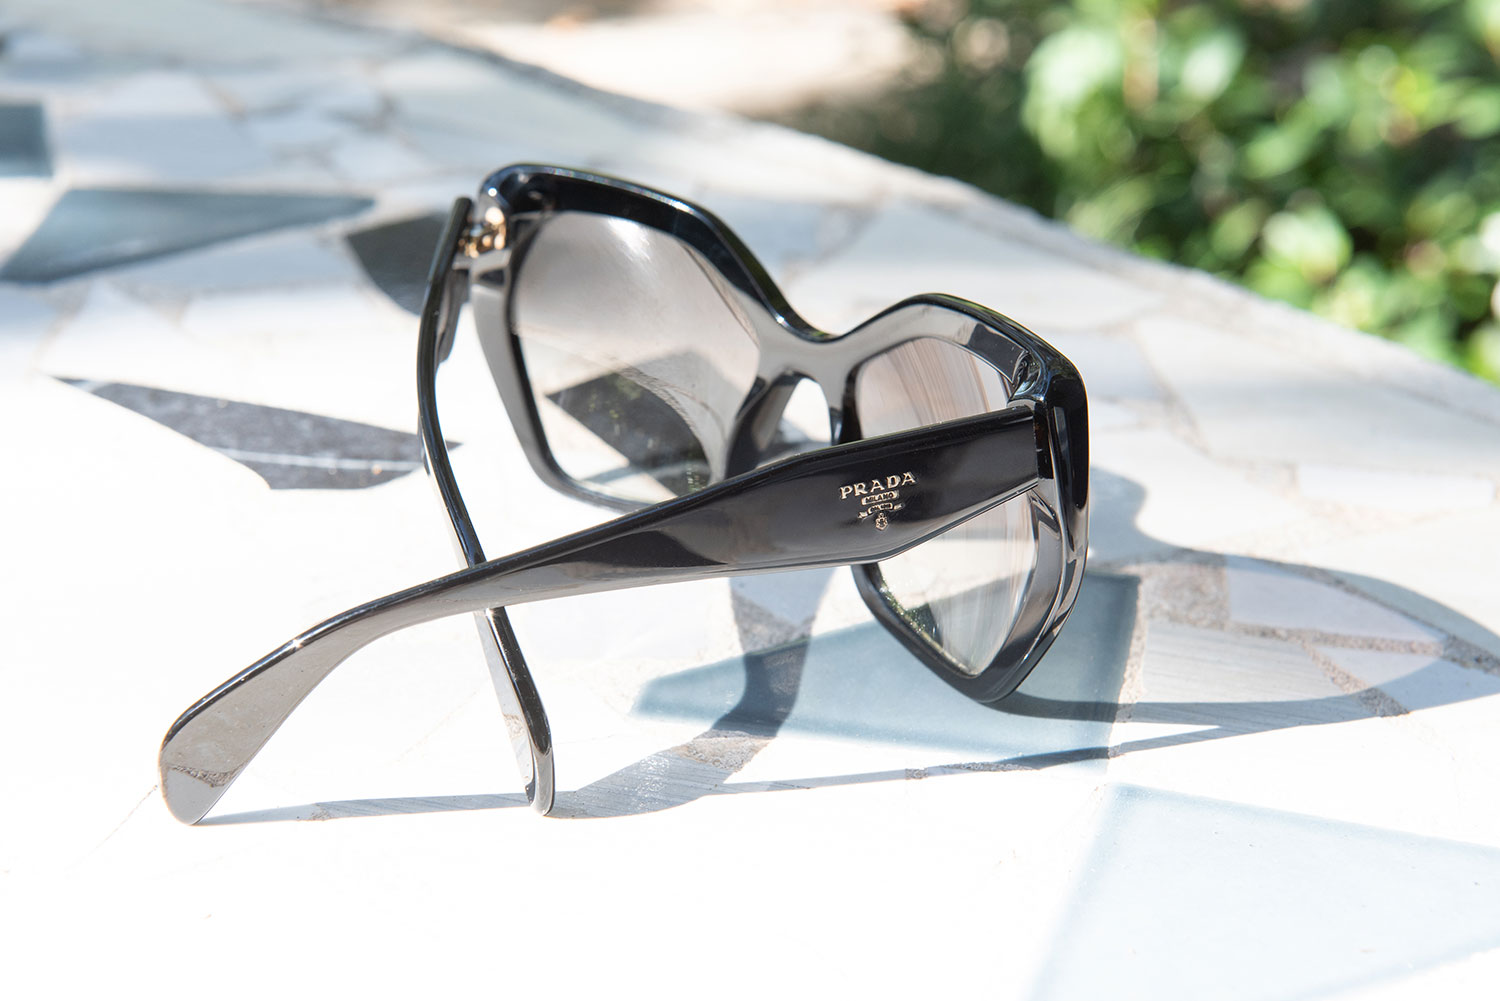 Prada 27N 27 ROK-4M1 Black Send Havana Gray Gradient Sunglasses Sale | eBay